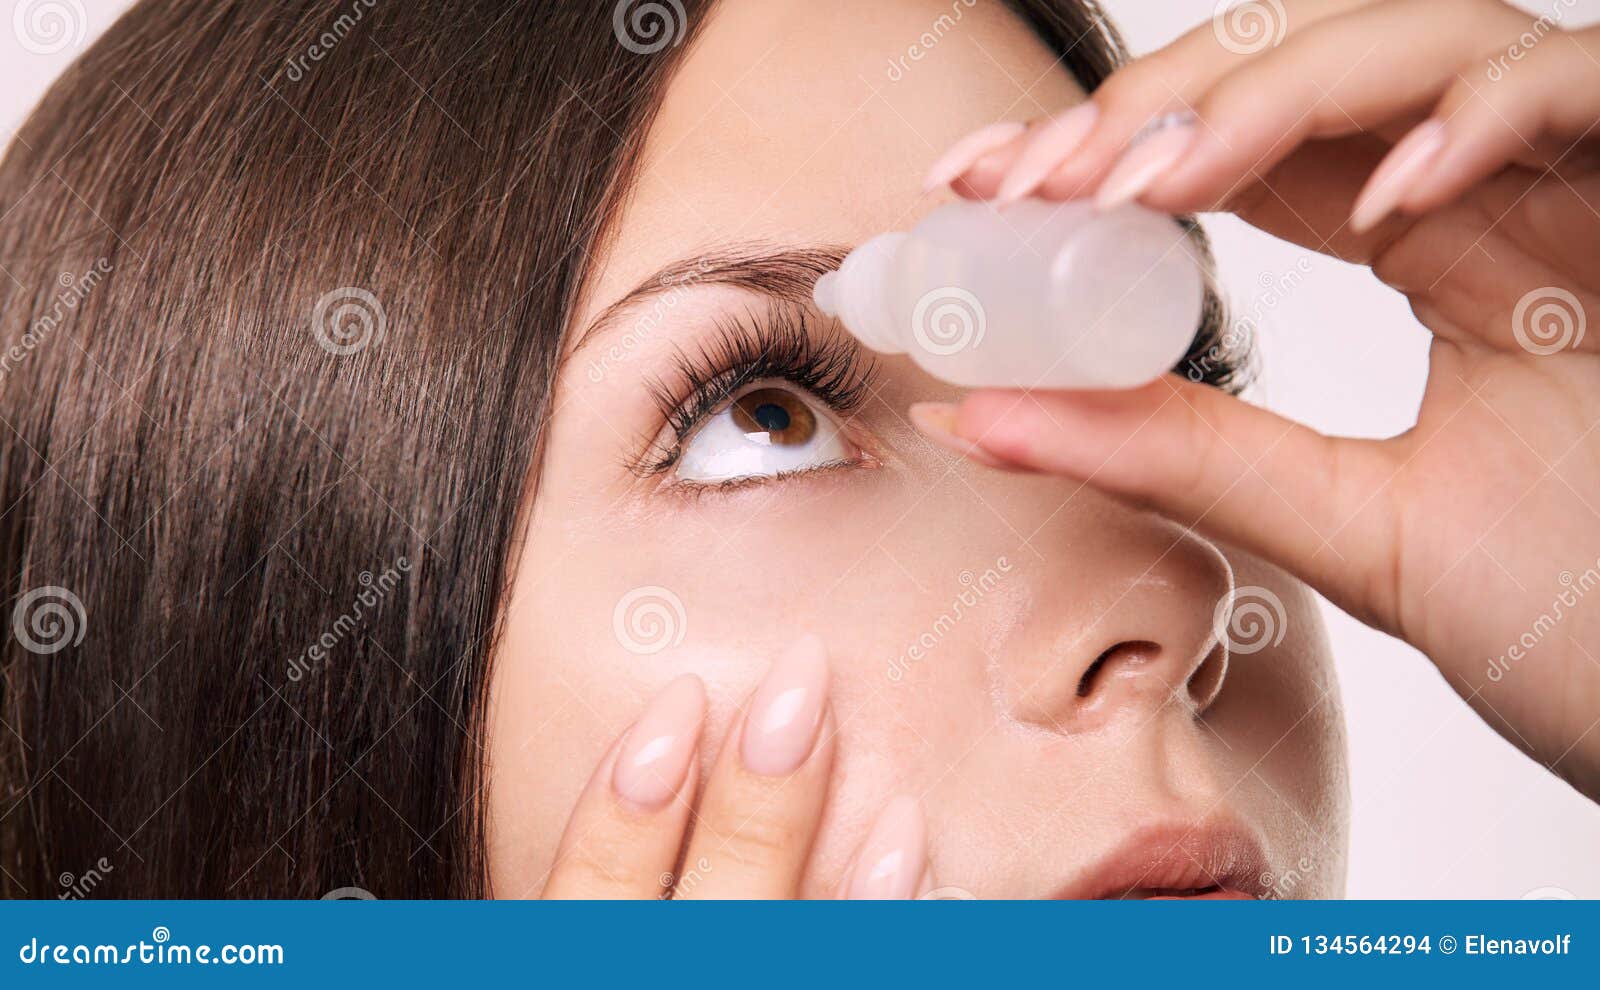 woman apply eye drops. girl glaucoma treatment